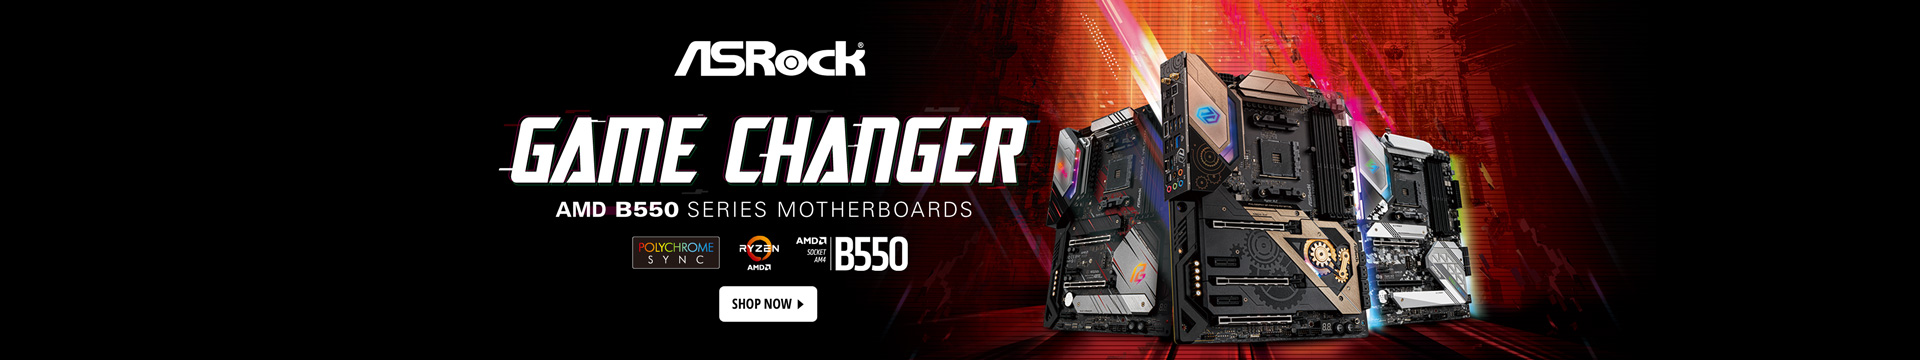 AMD B550 SERIES MOTHERBOARDS